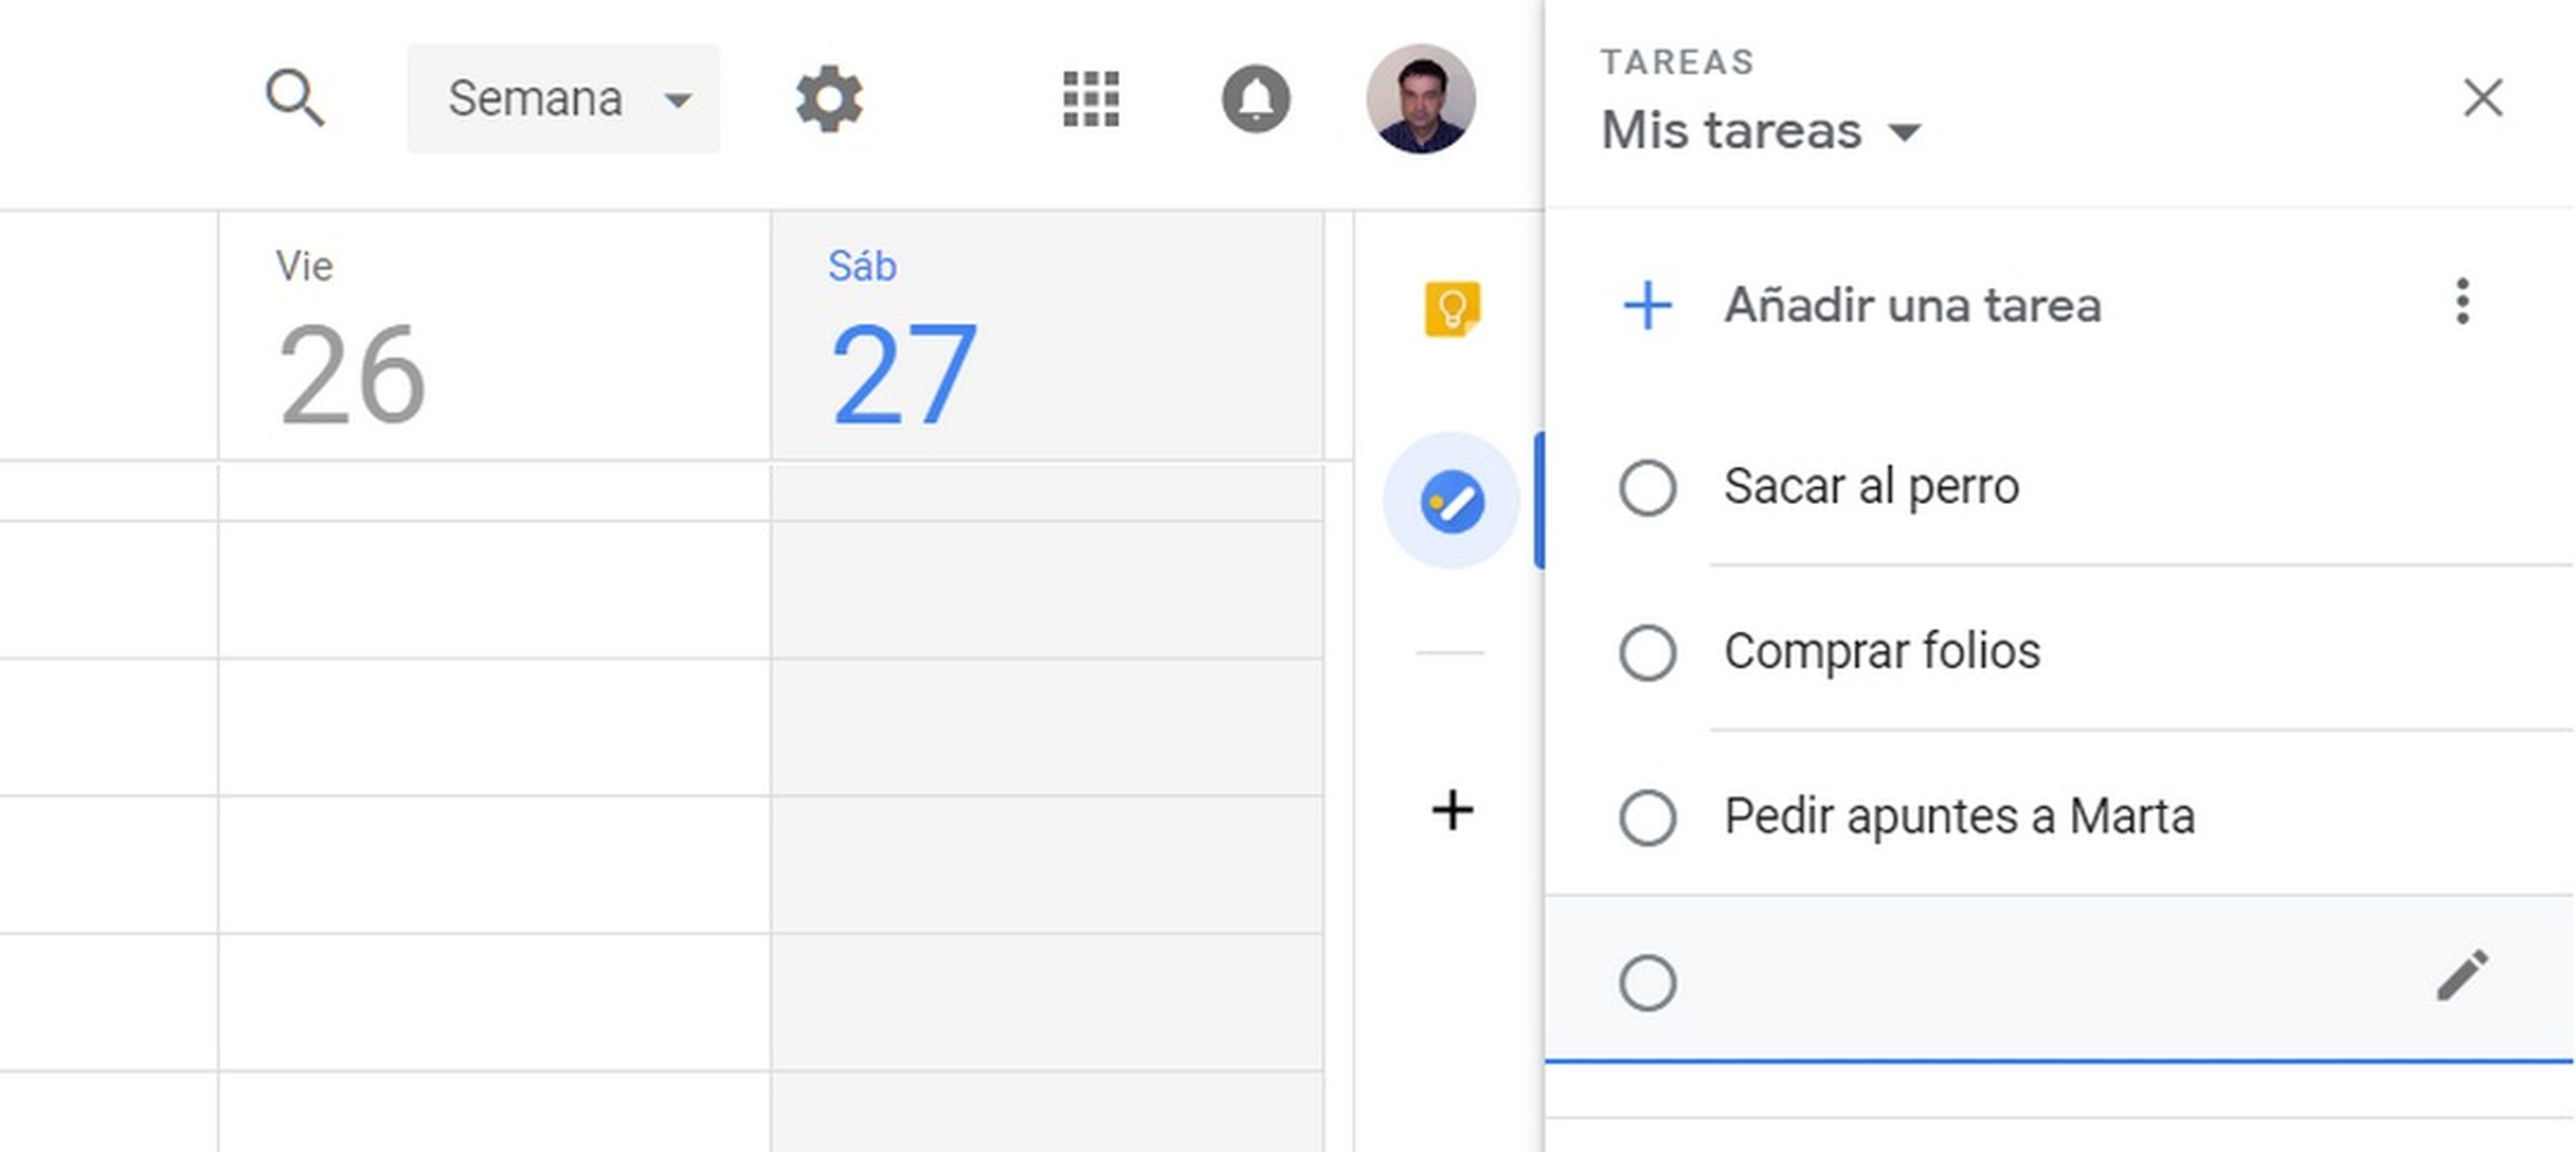 Así puedes aprovechar Google Calendar si eres estudiante